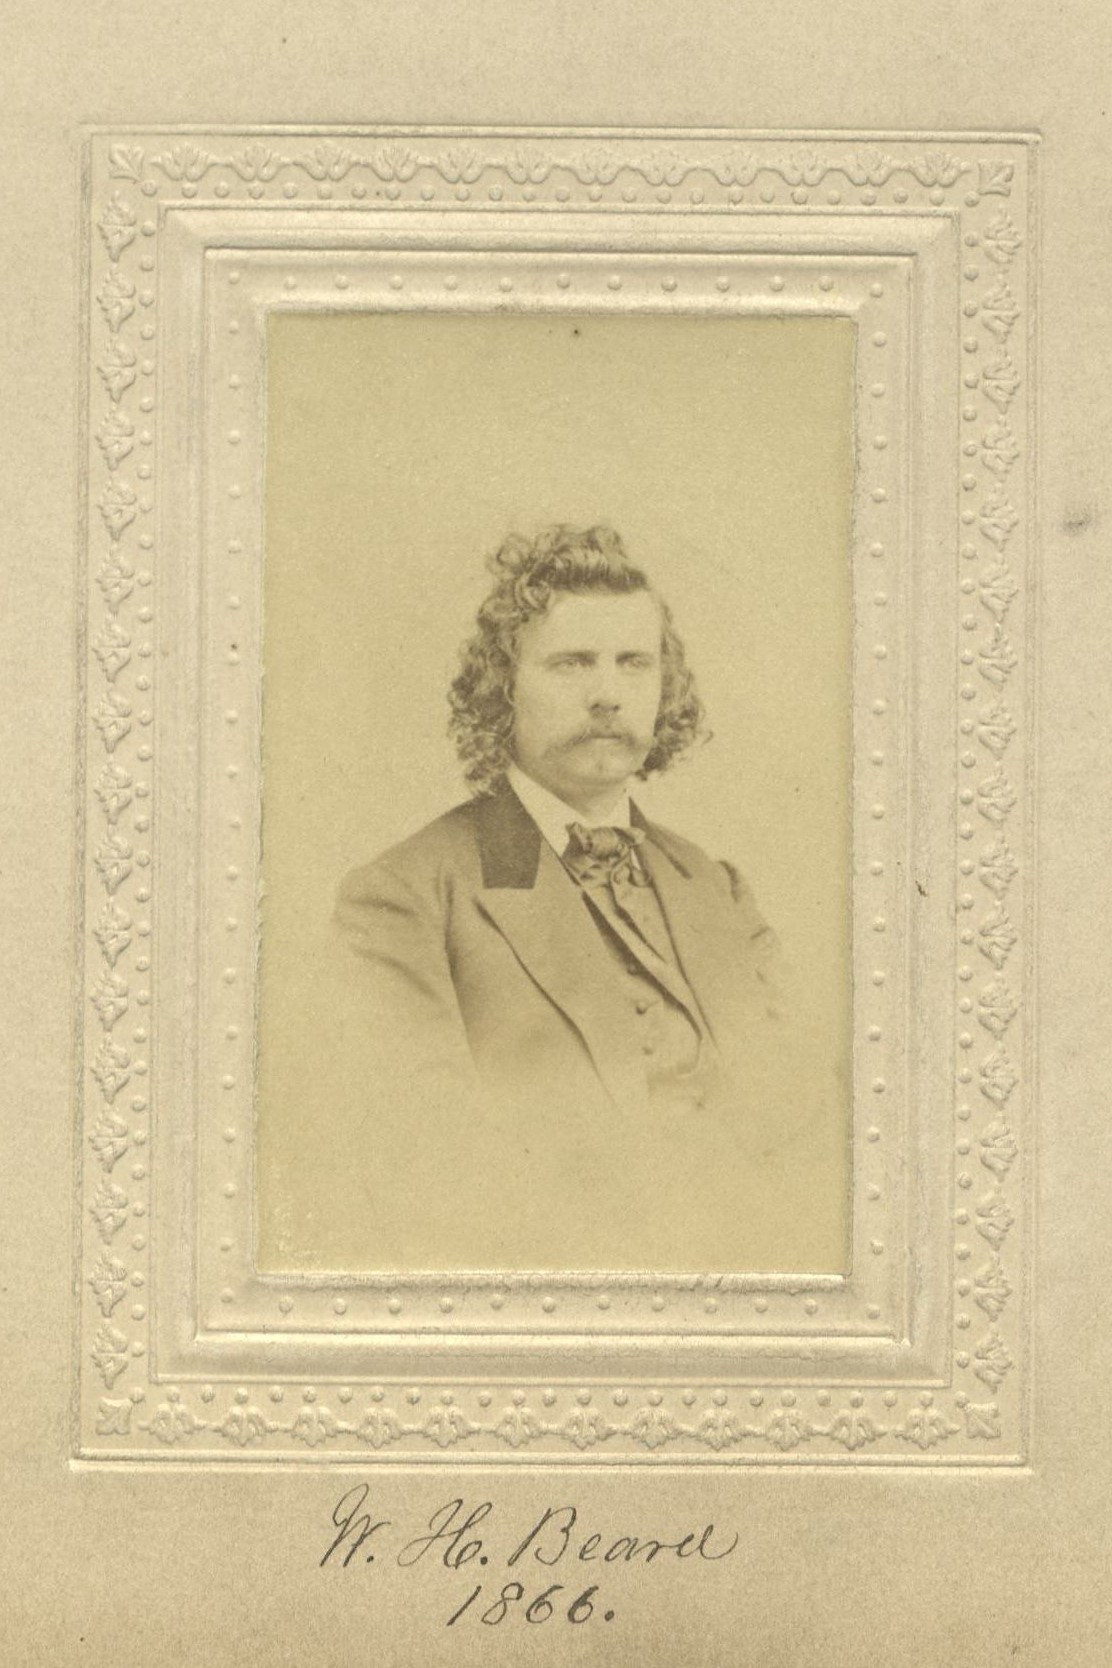 Member portrait of William H. Beard